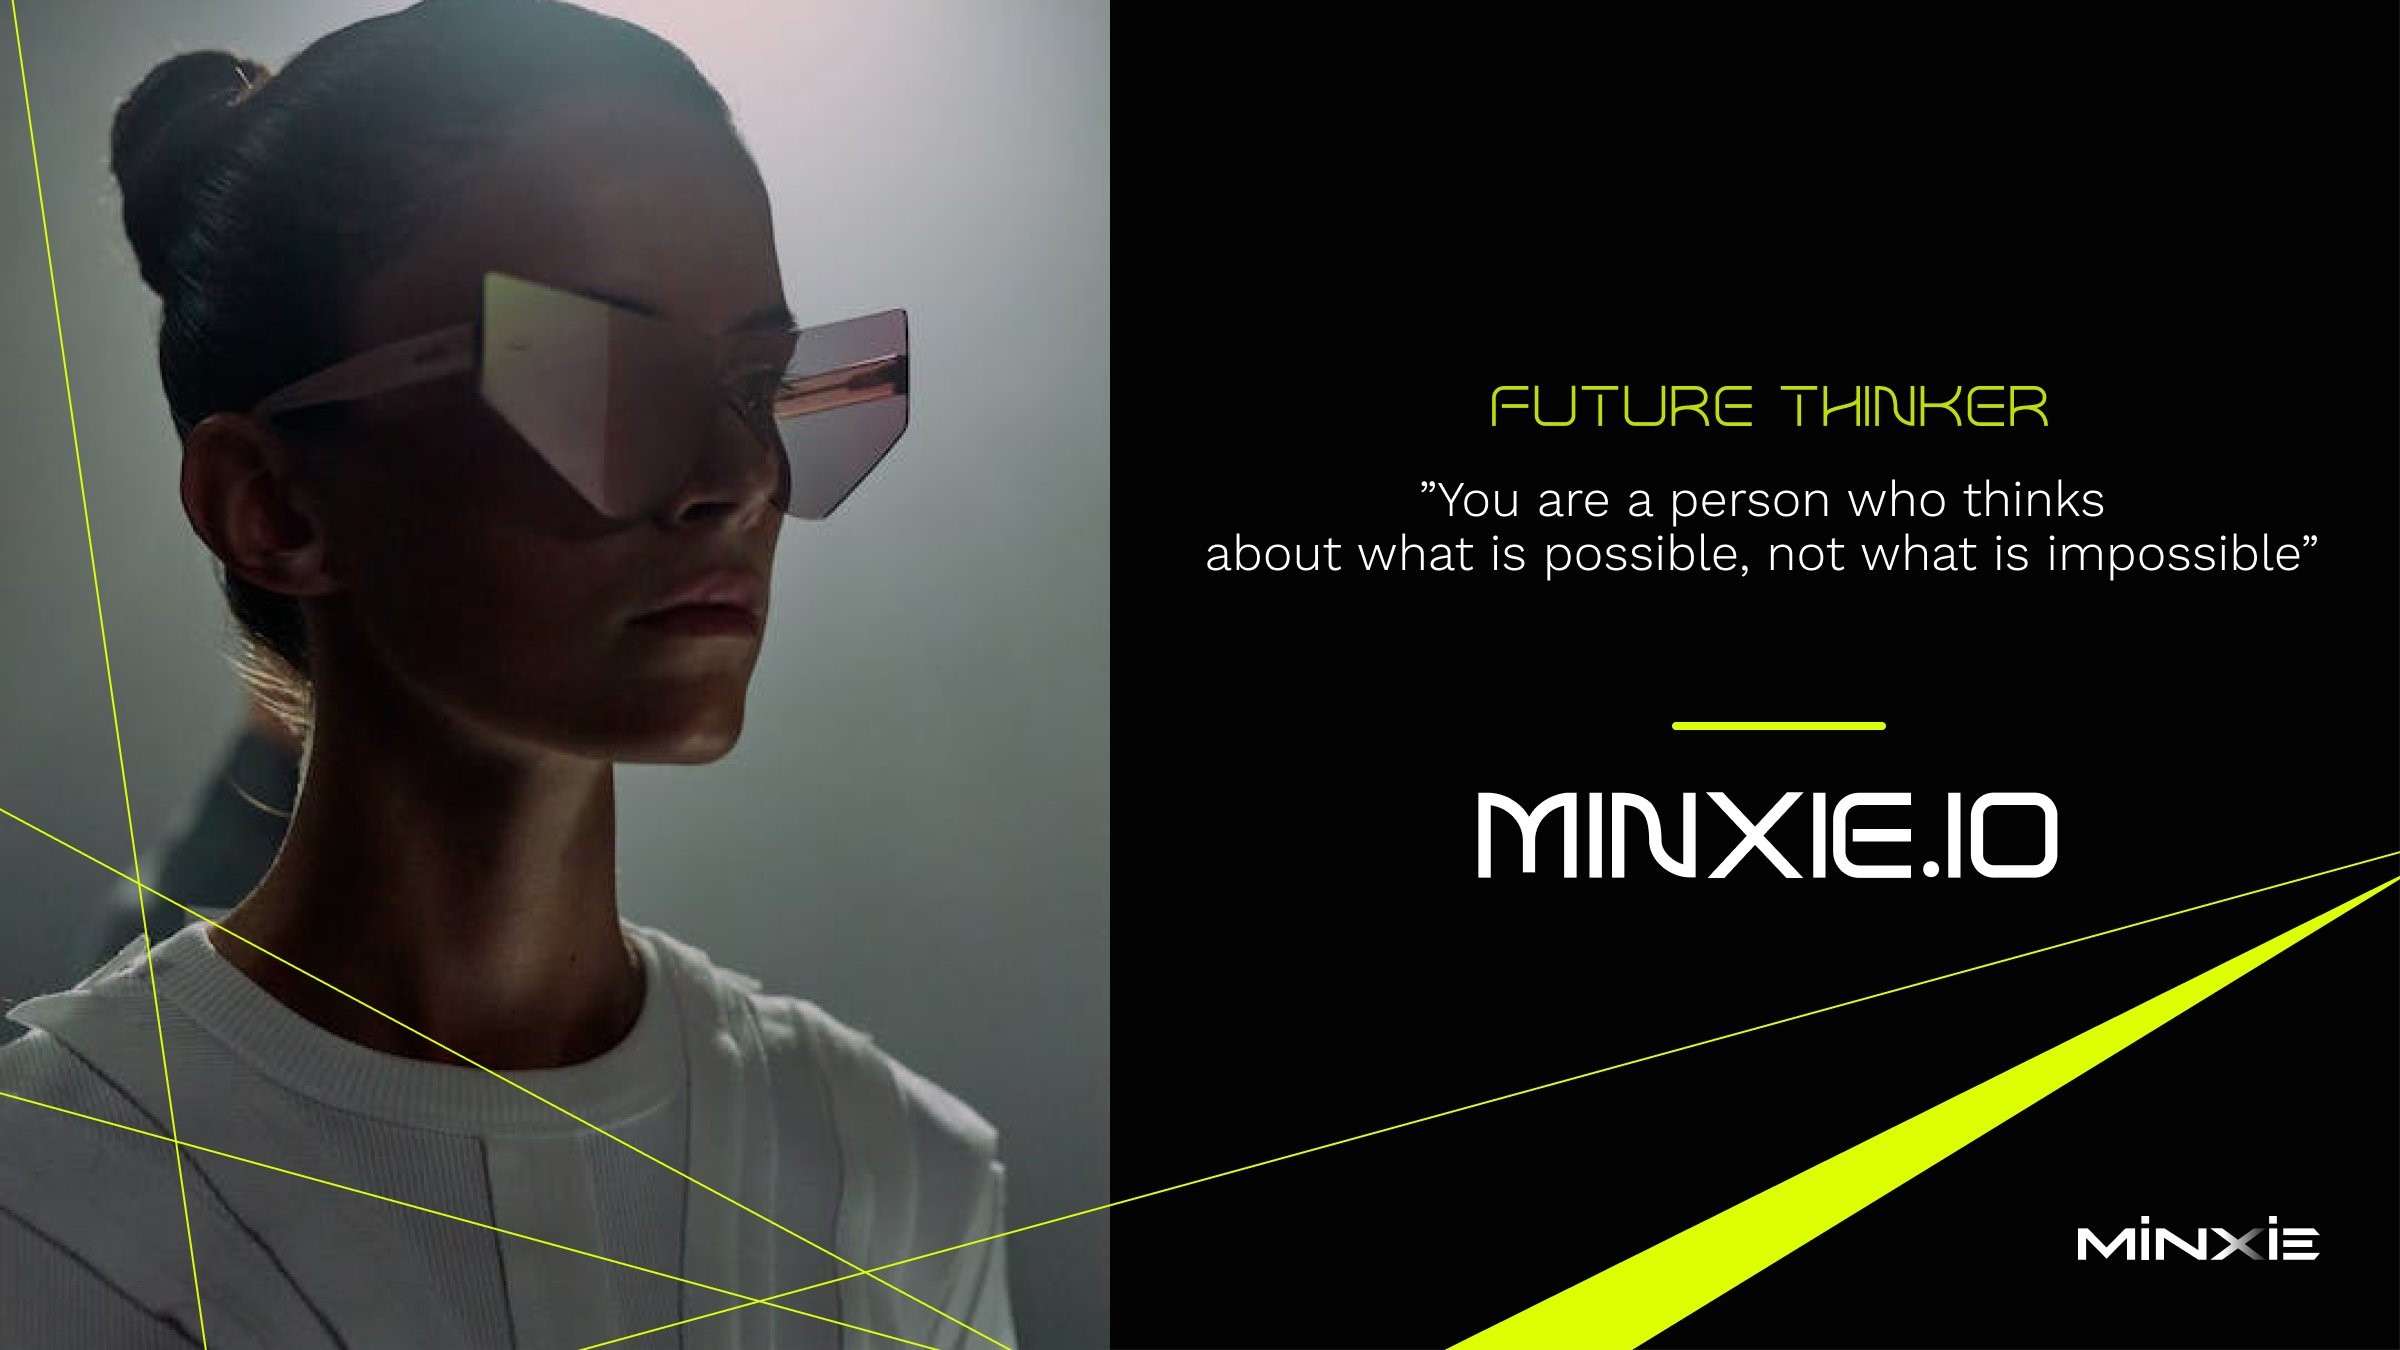 Minxie.io as a content creation platform